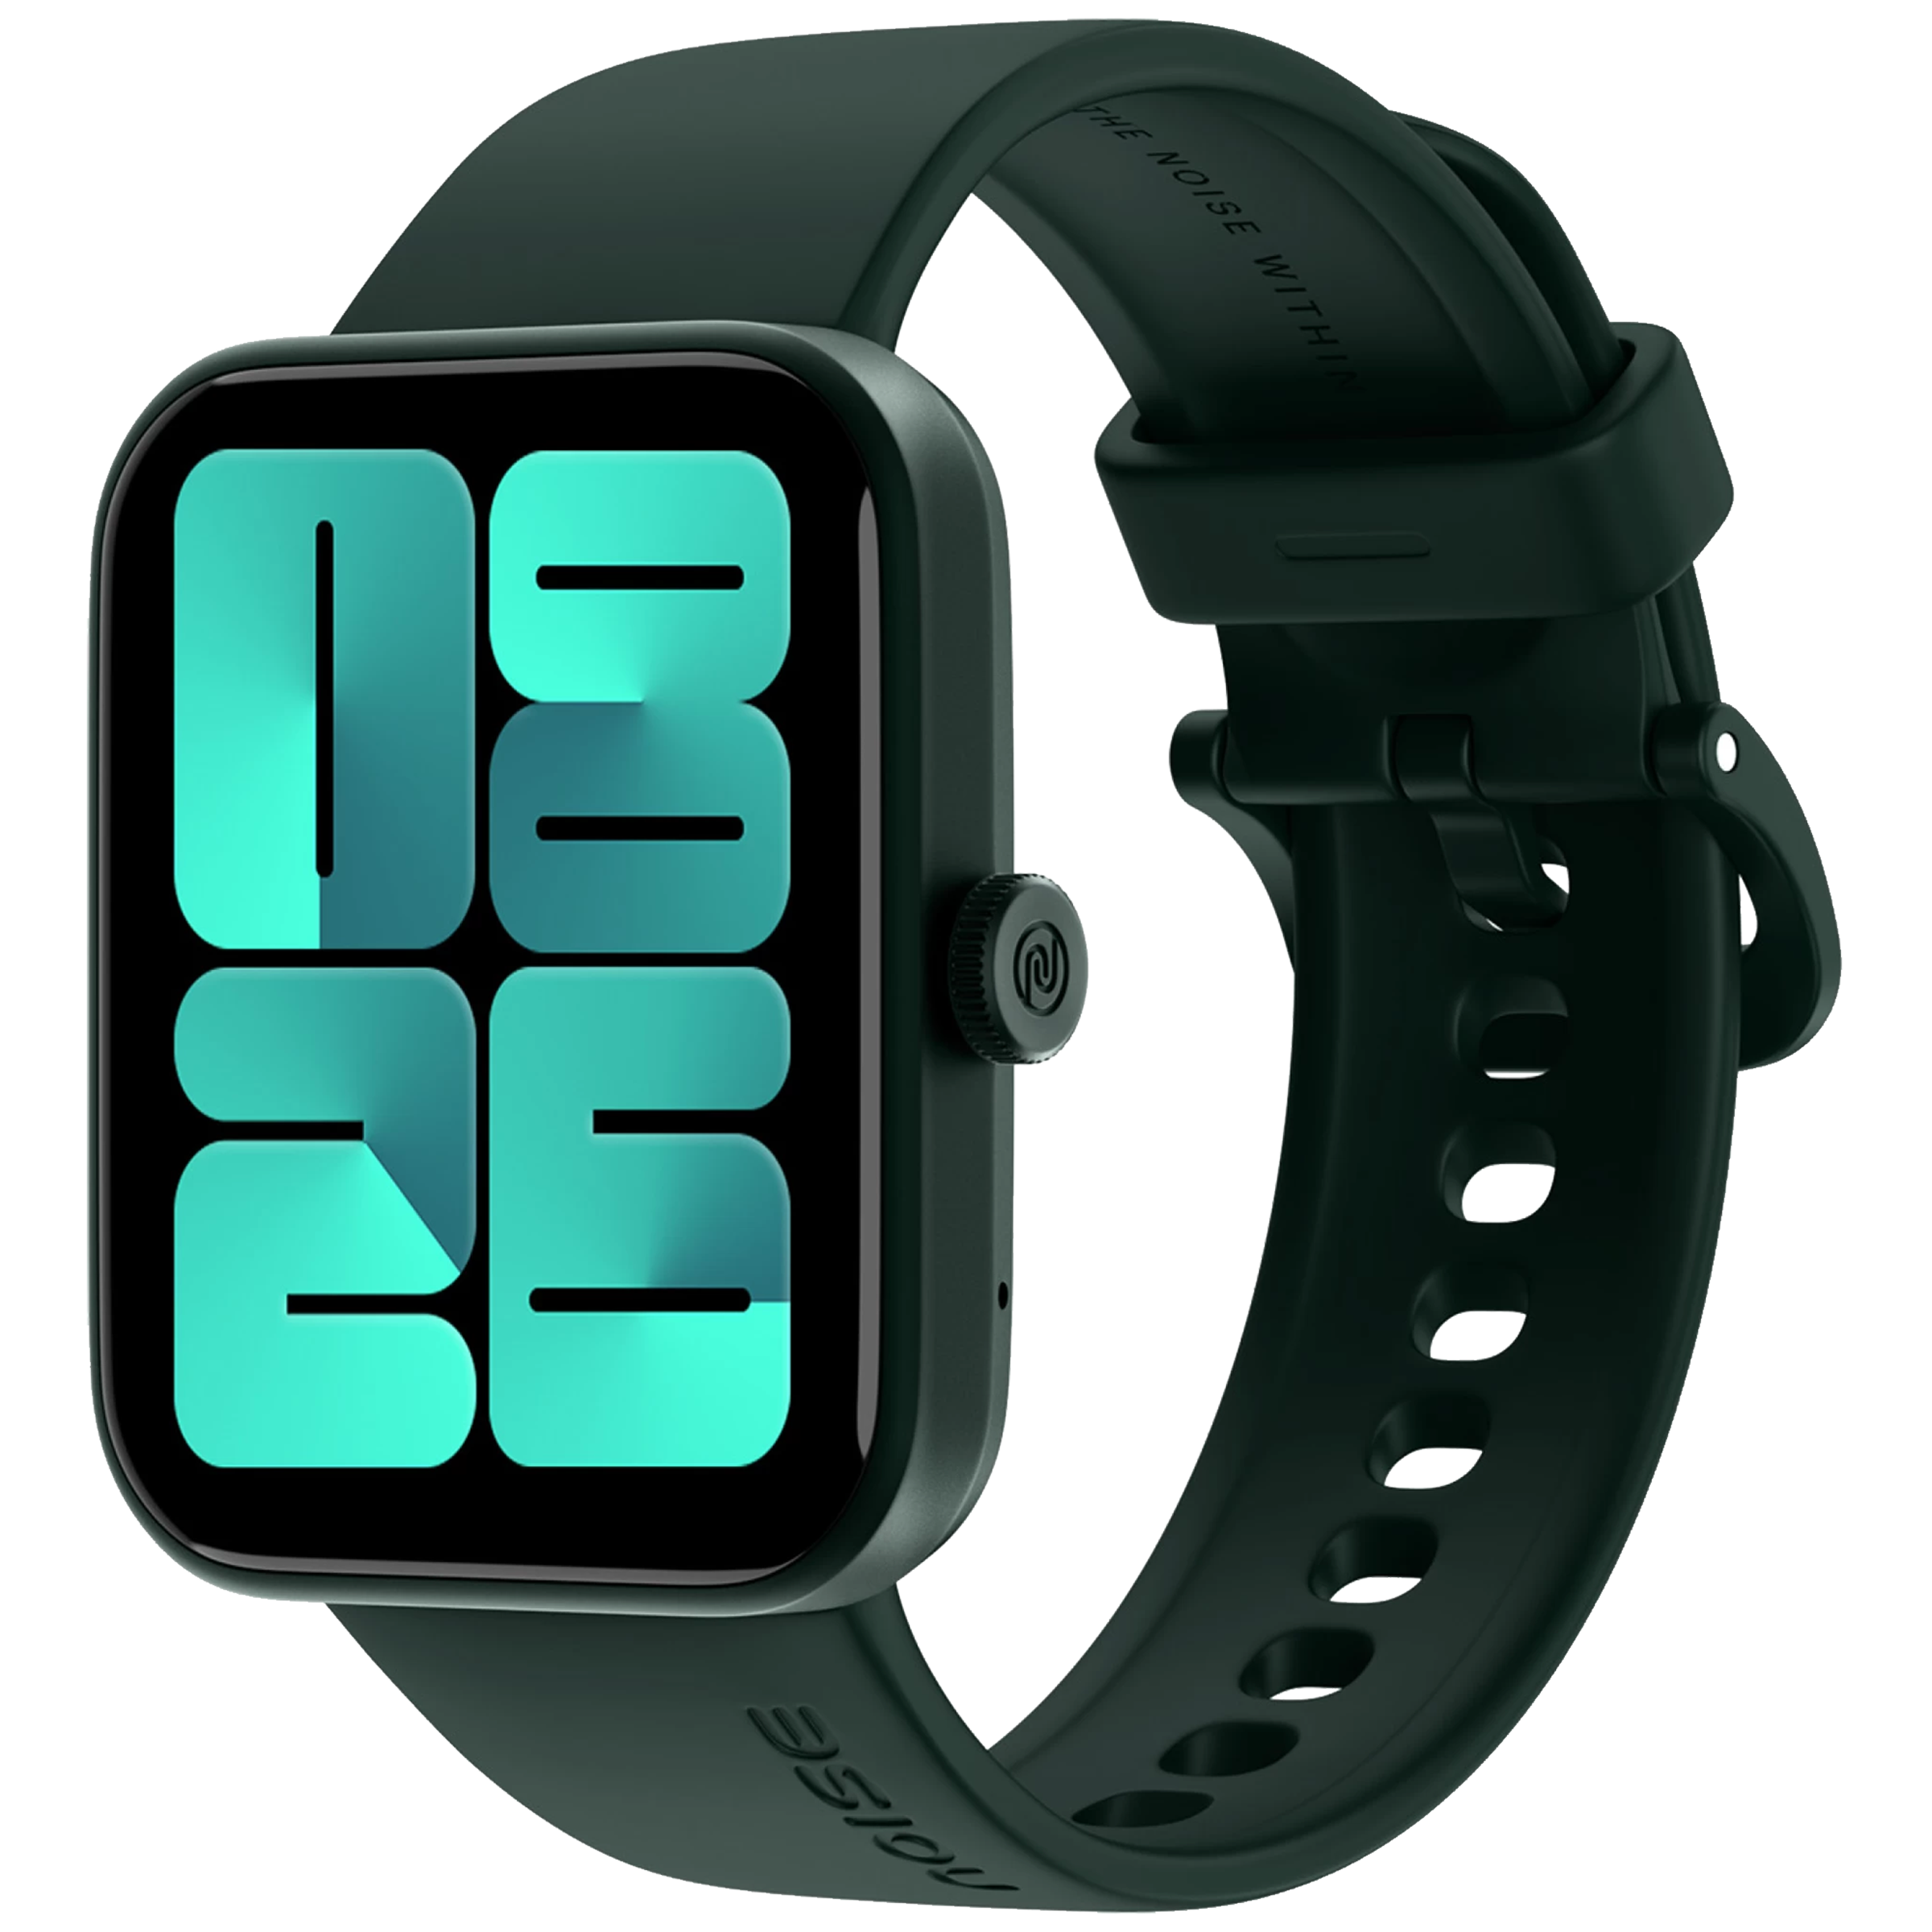 Noise ColorFit Ultra Smartwatch Unboxing & Review #GadgetGig - YouTube